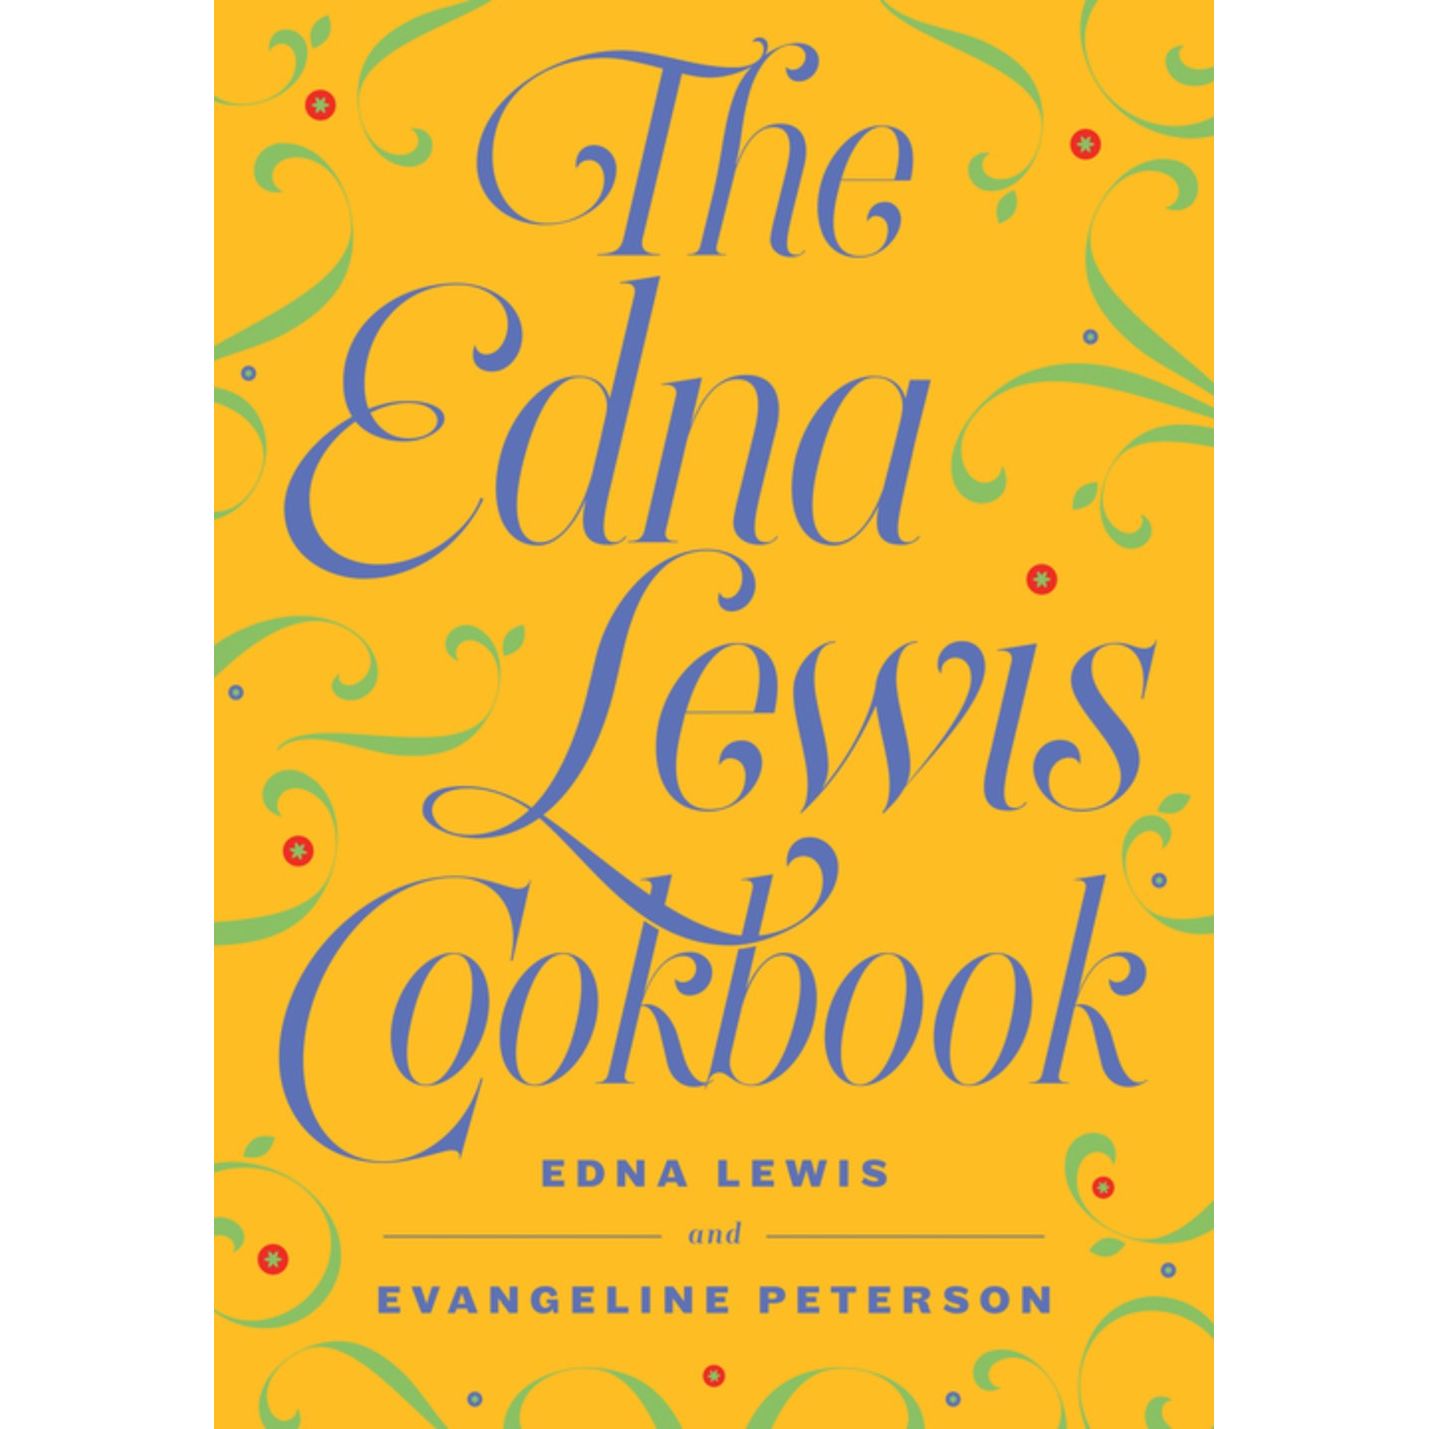 The Edna Lewis Cookbook (Edna Lewis & Evangeline Peterson)